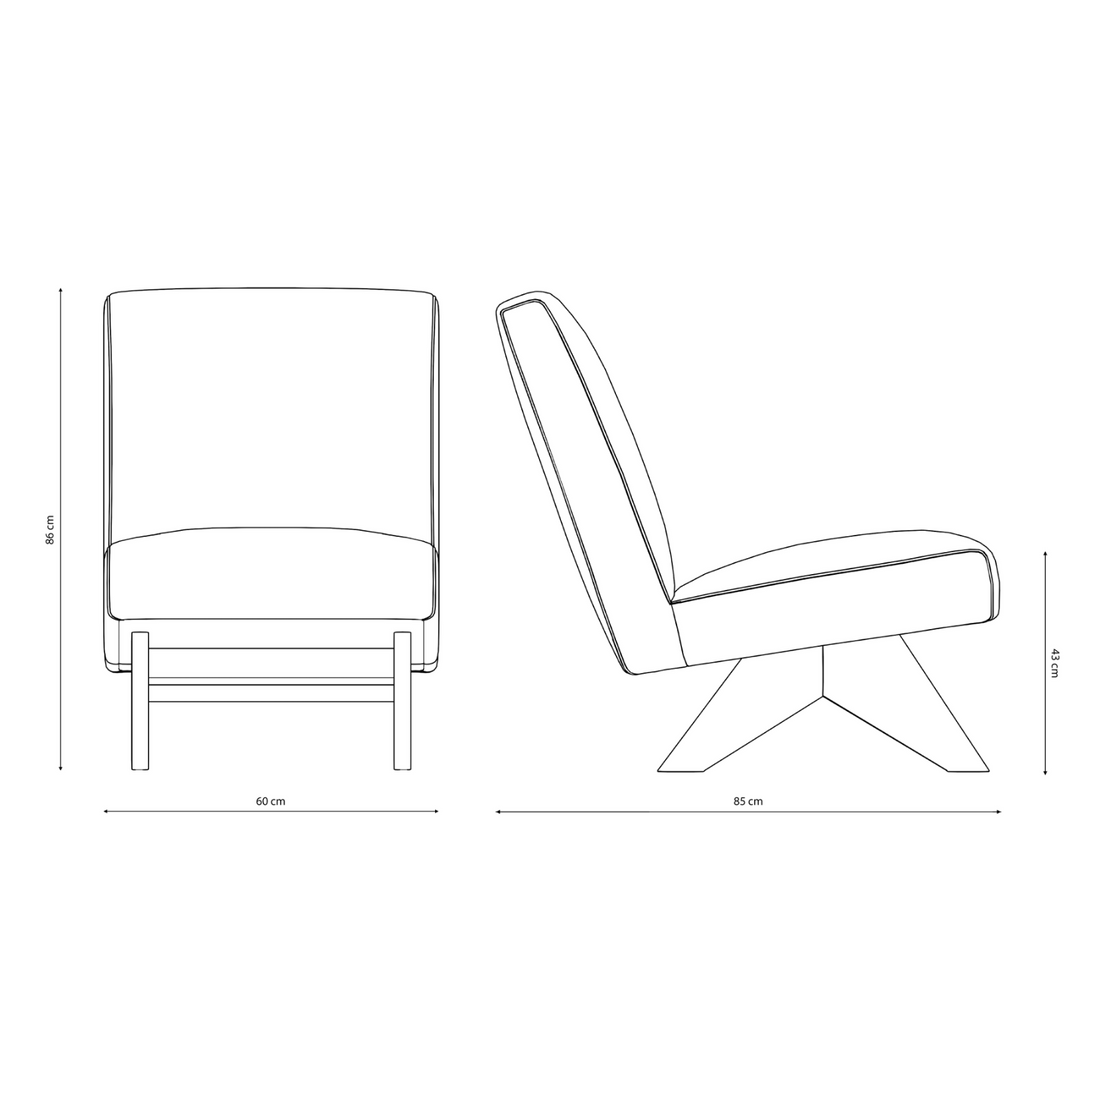 DETJER Easy Lounge Sofa Dimensions